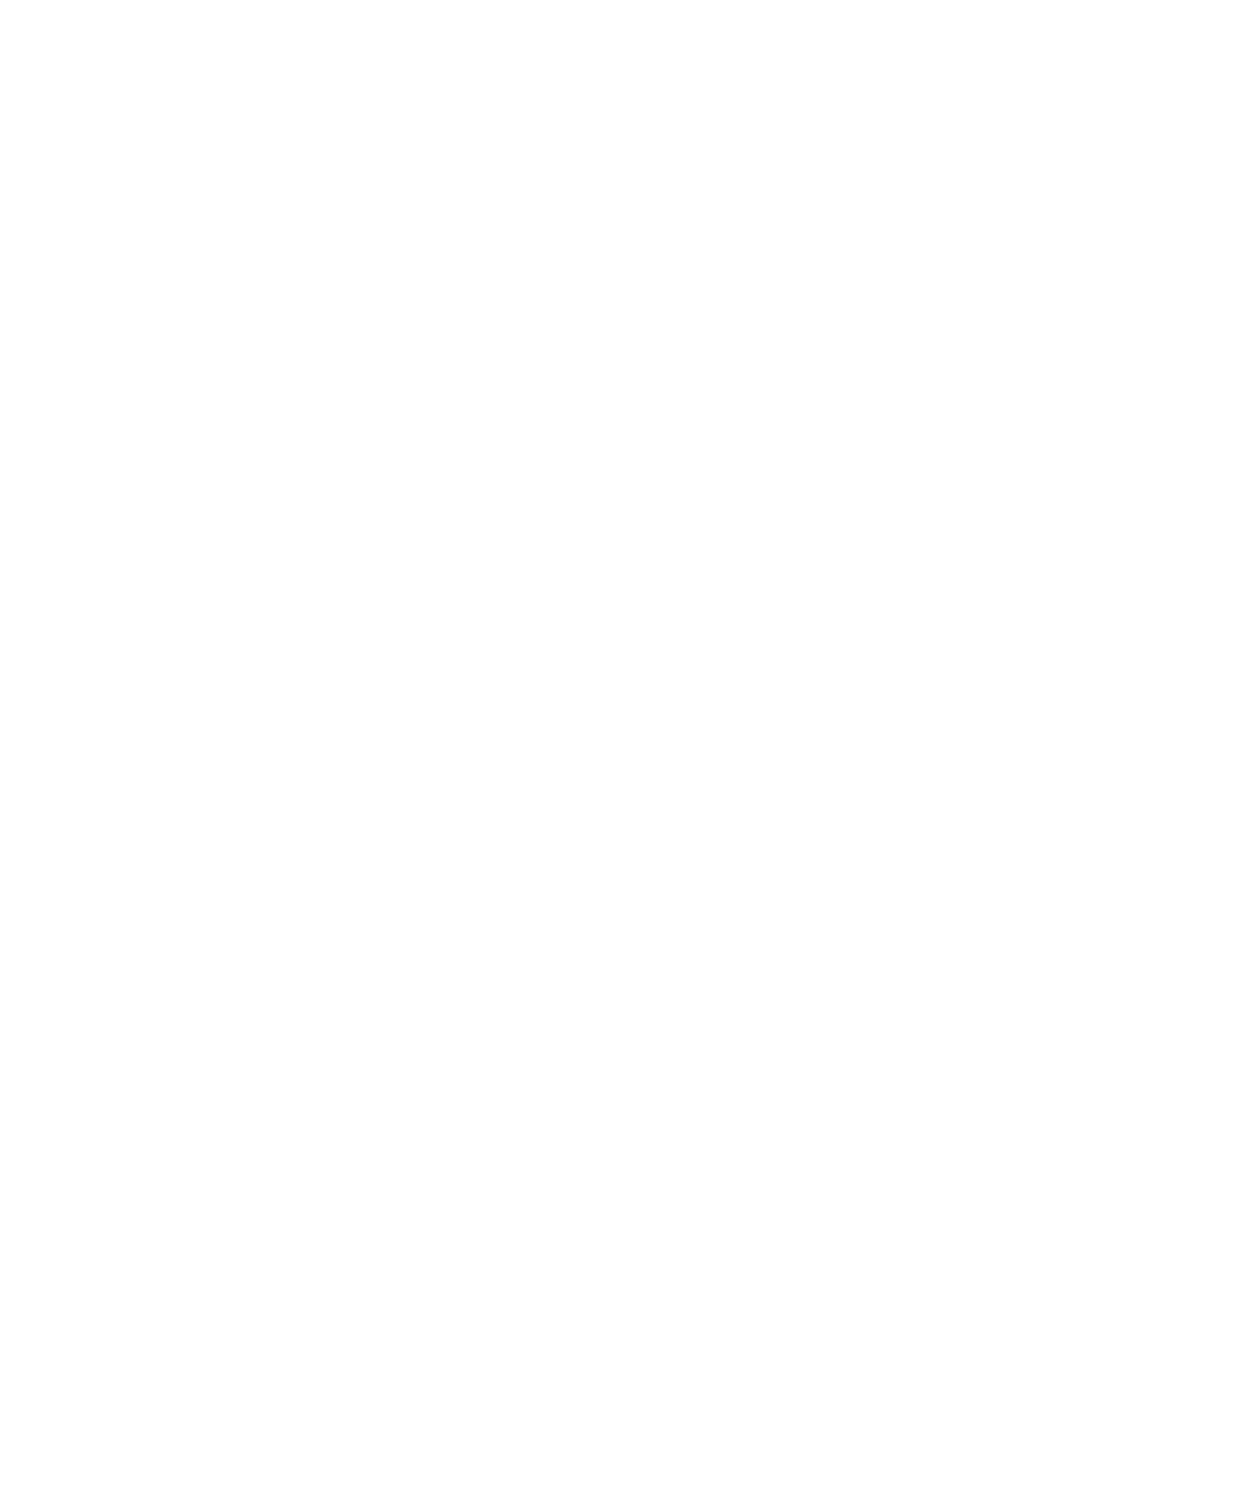 Thunderful Group logo pour fonds sombres (PNG transparent)